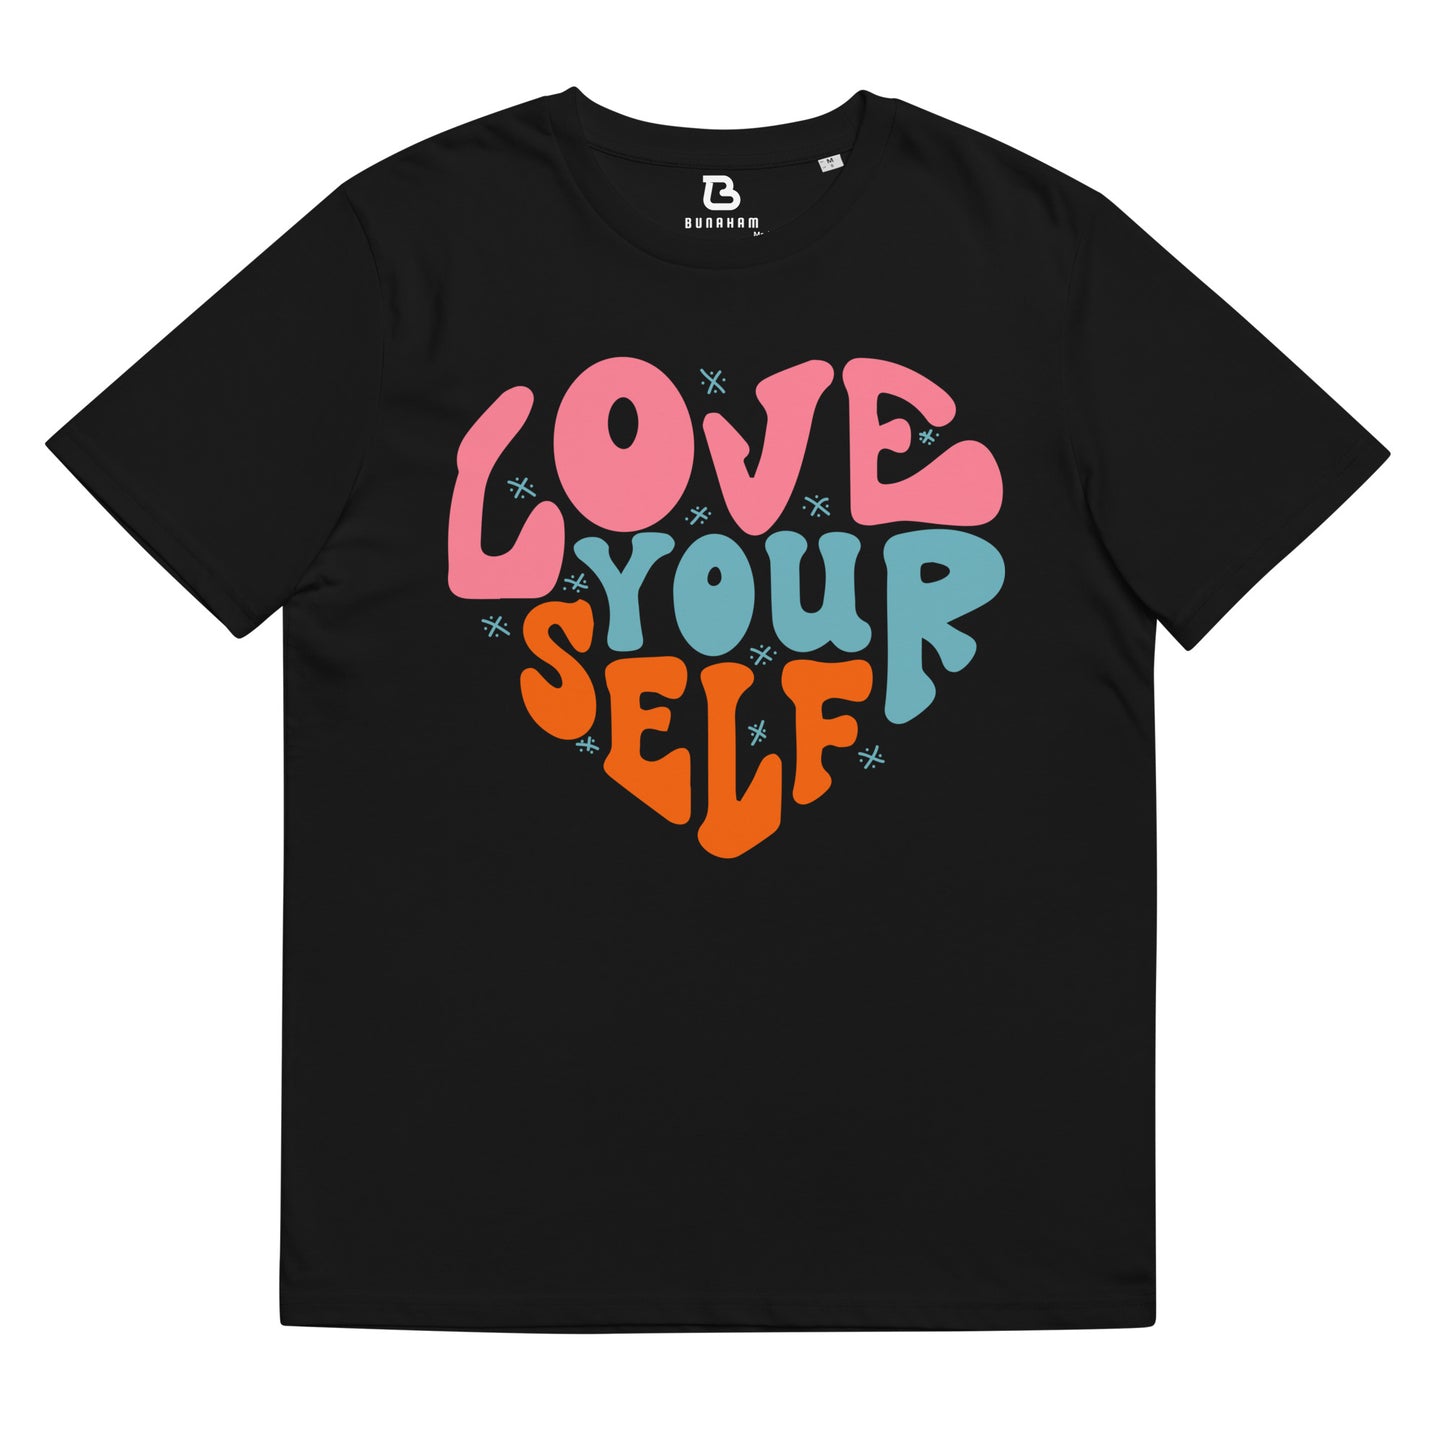 Unisex Organic Cotton T-shirt - Love Yourself